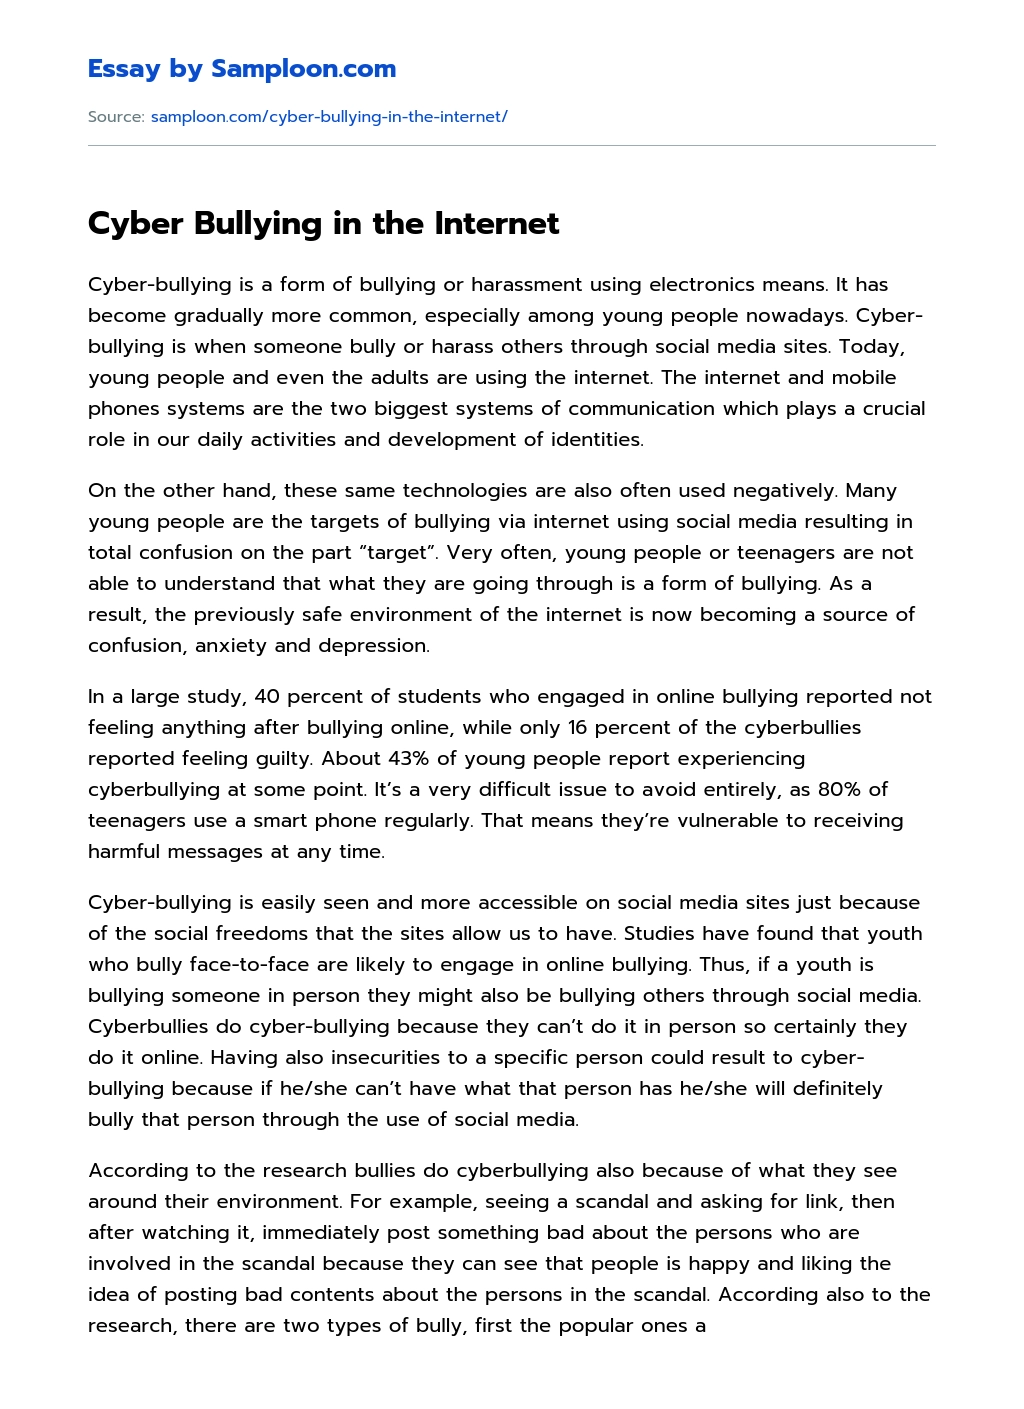 should cyberbullies be prosecuted essay